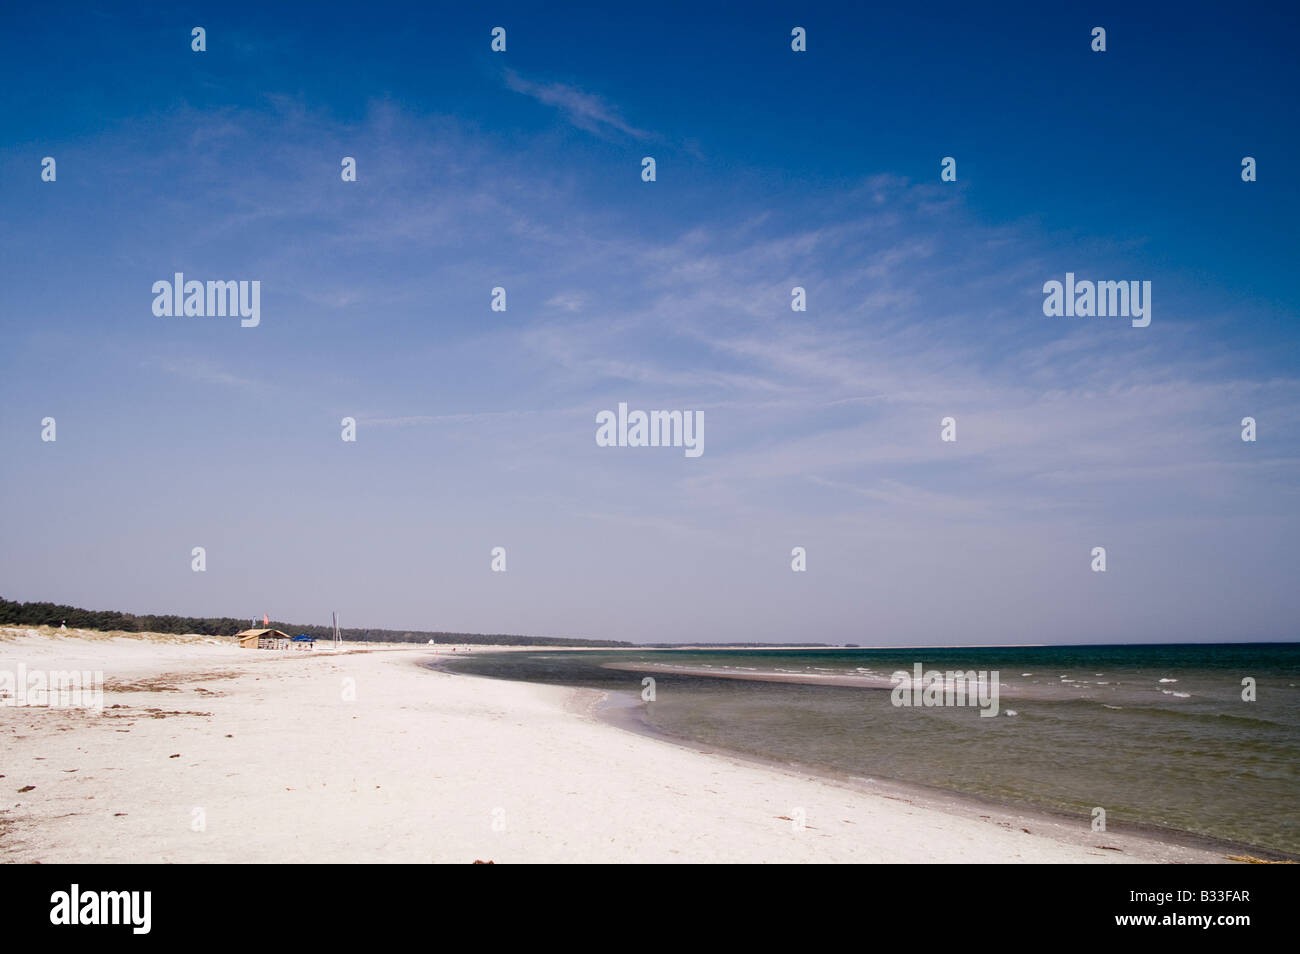 Darss beach near Prerow, Germany Stock Photo